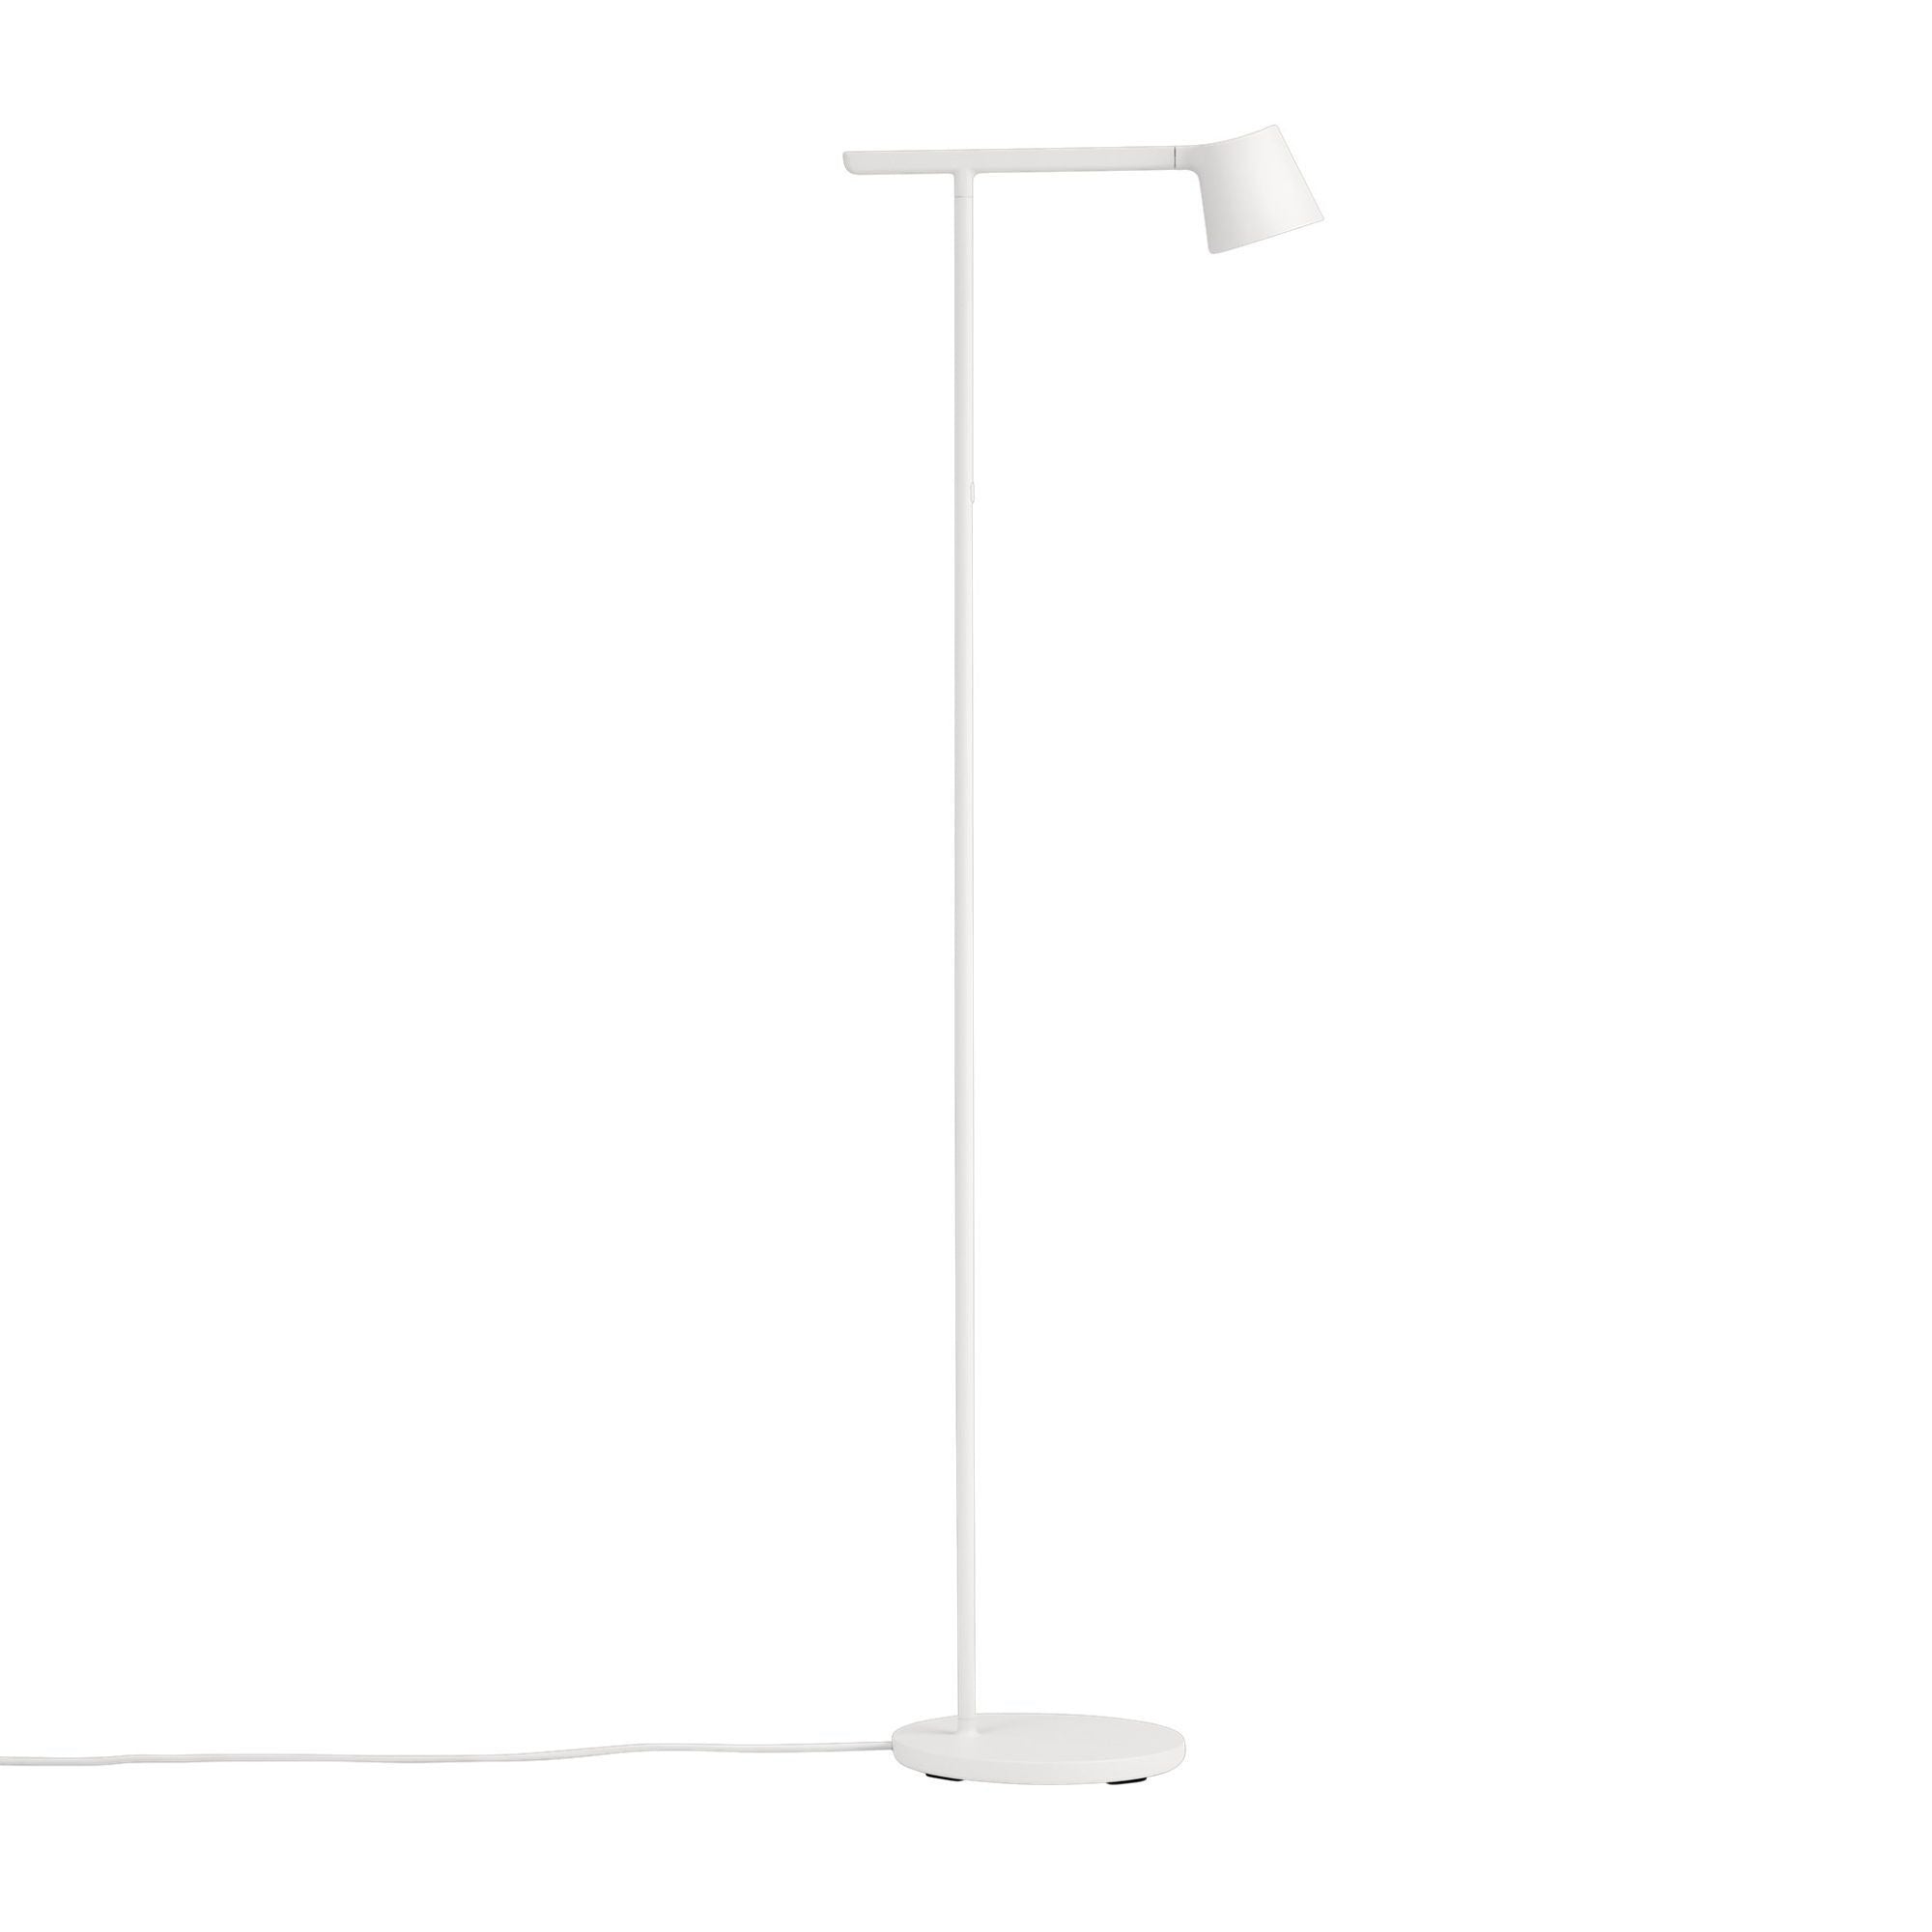 Muuto Tip floor lamp, white